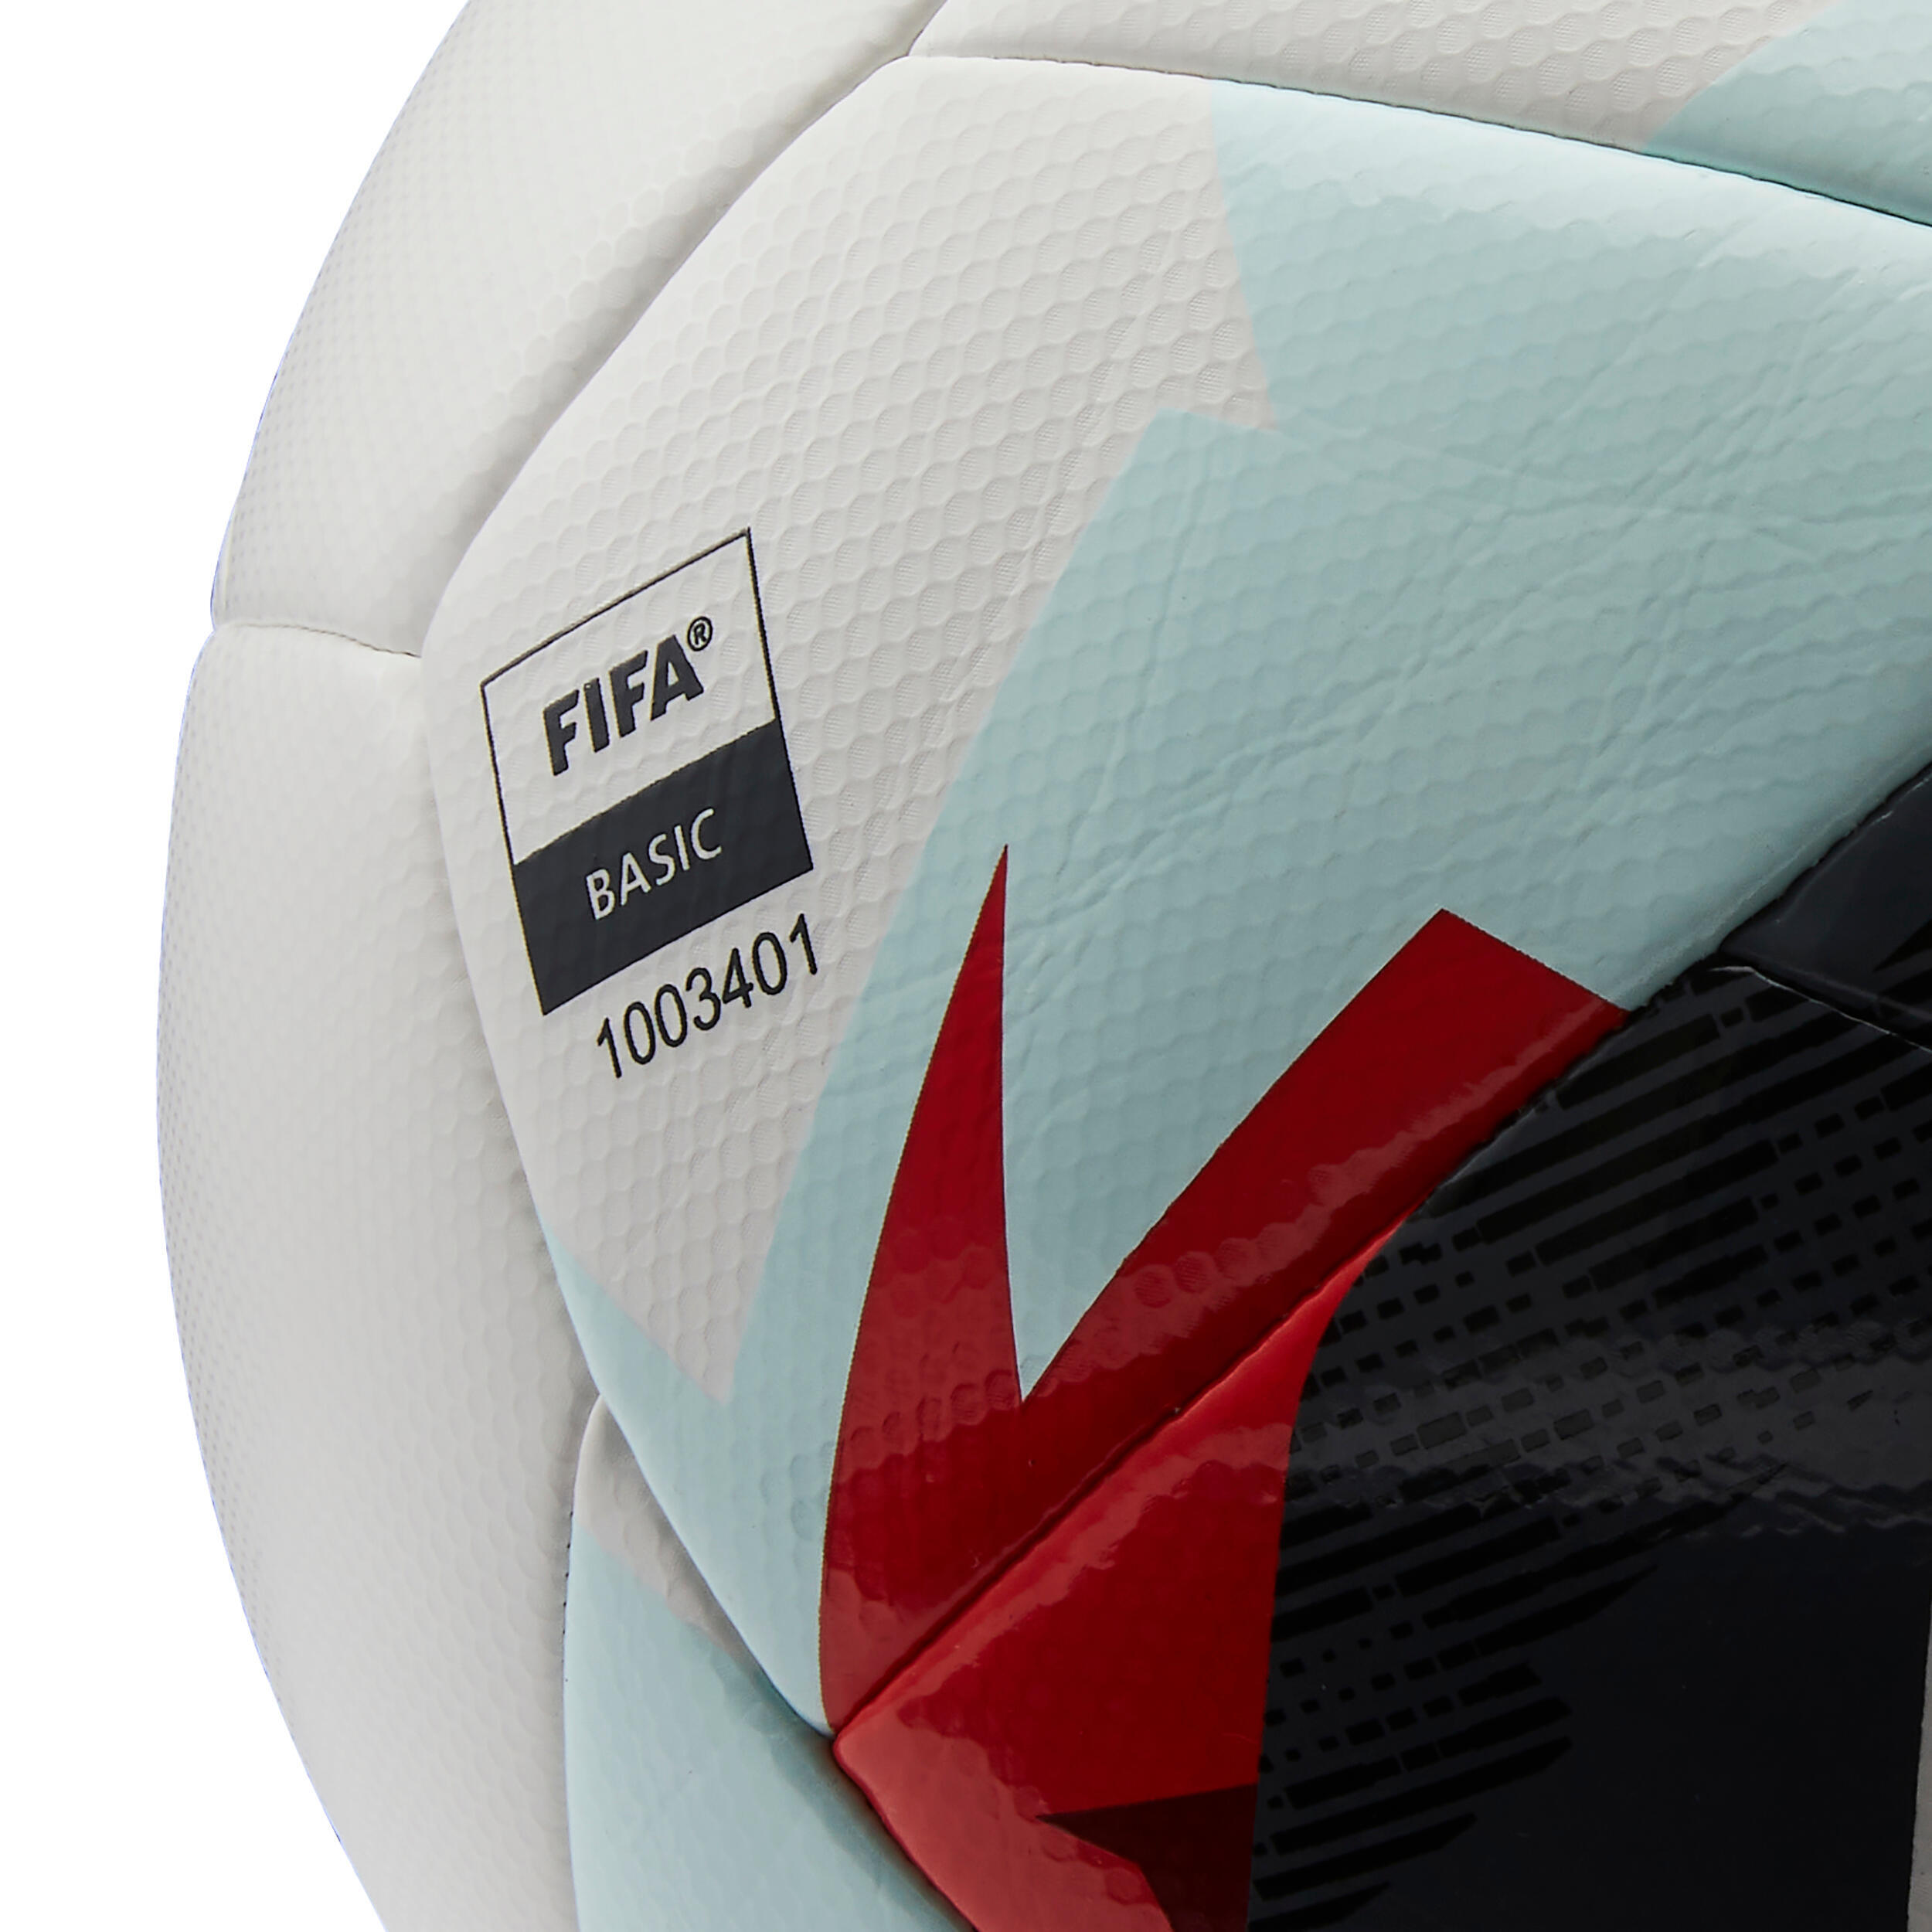 Hybrid Football FIFA Basic F550 Size 5 - White/Red 4/7